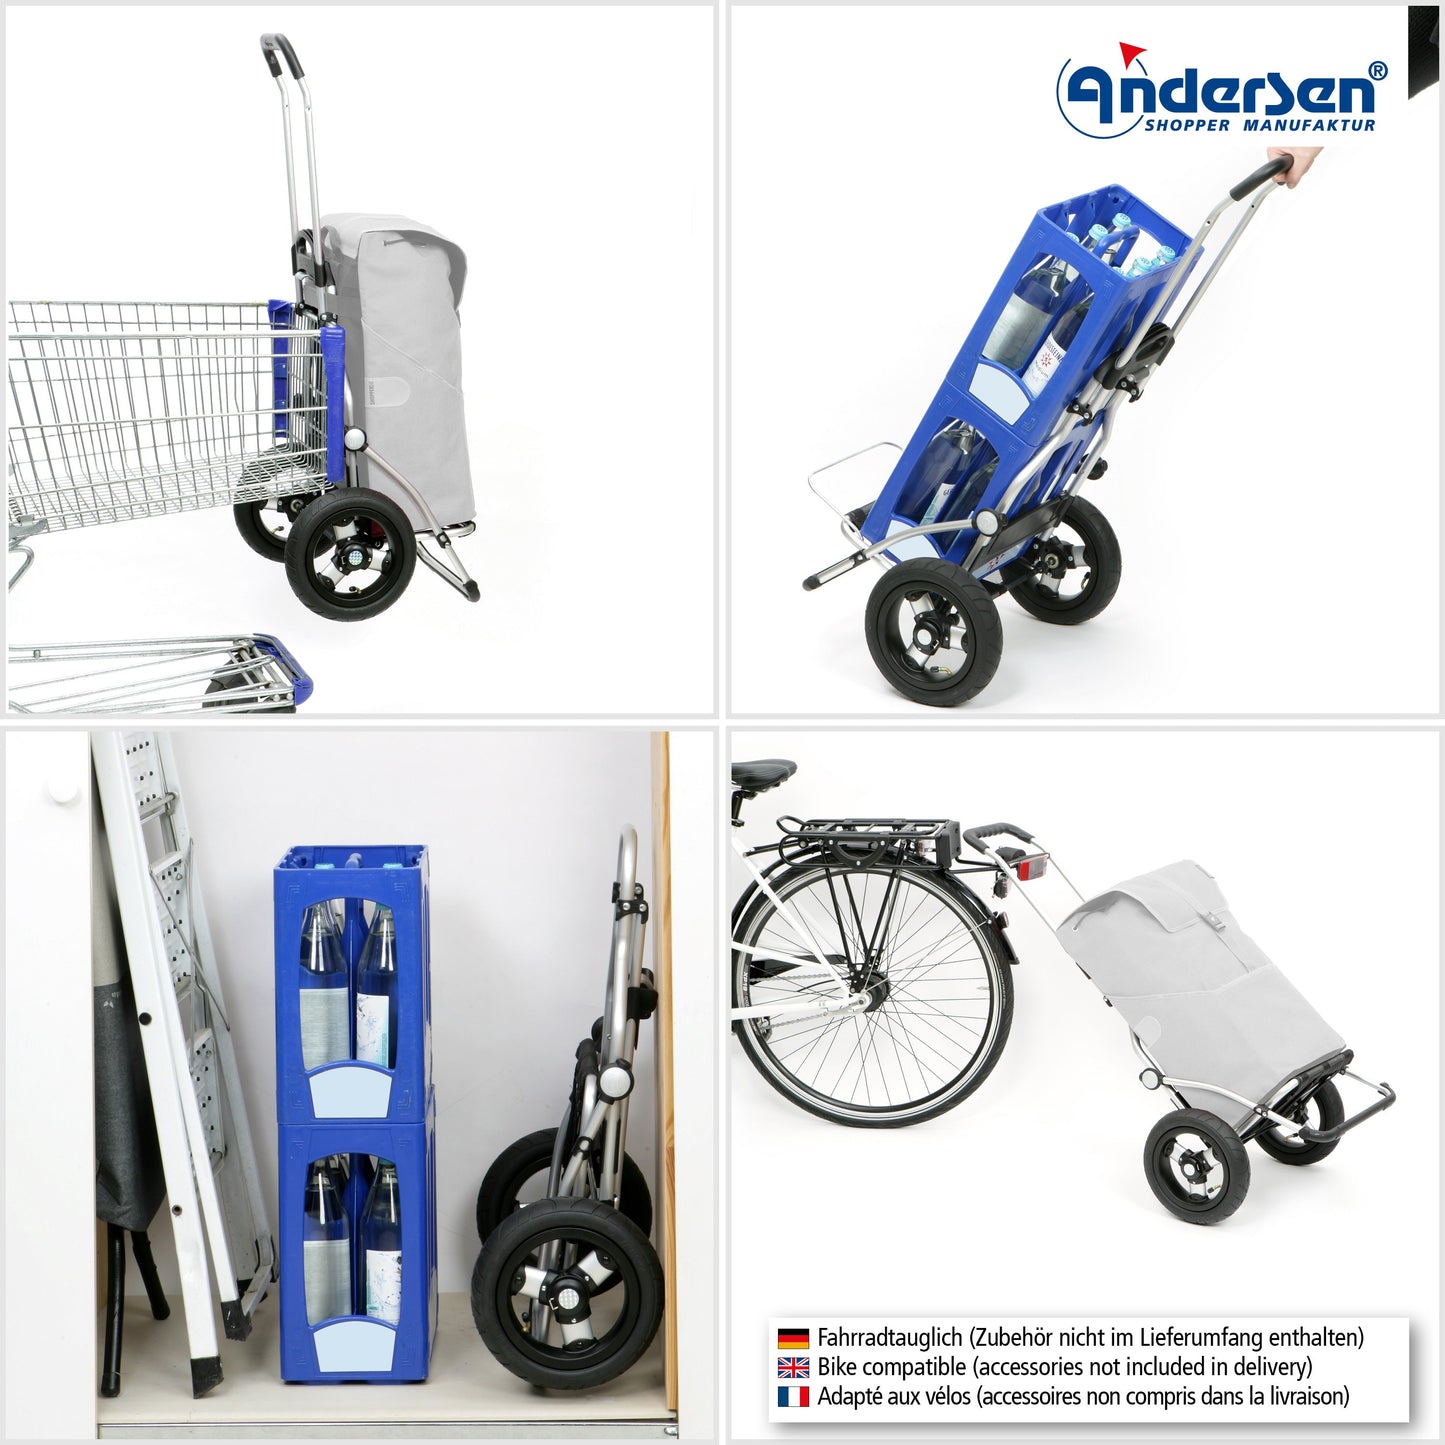 Andersen Shopper Manufaktur-Royal Shopper (Luft-Kugellagerrad 25 cm) Famke blau-www.shopping-trolley.ch-bild4